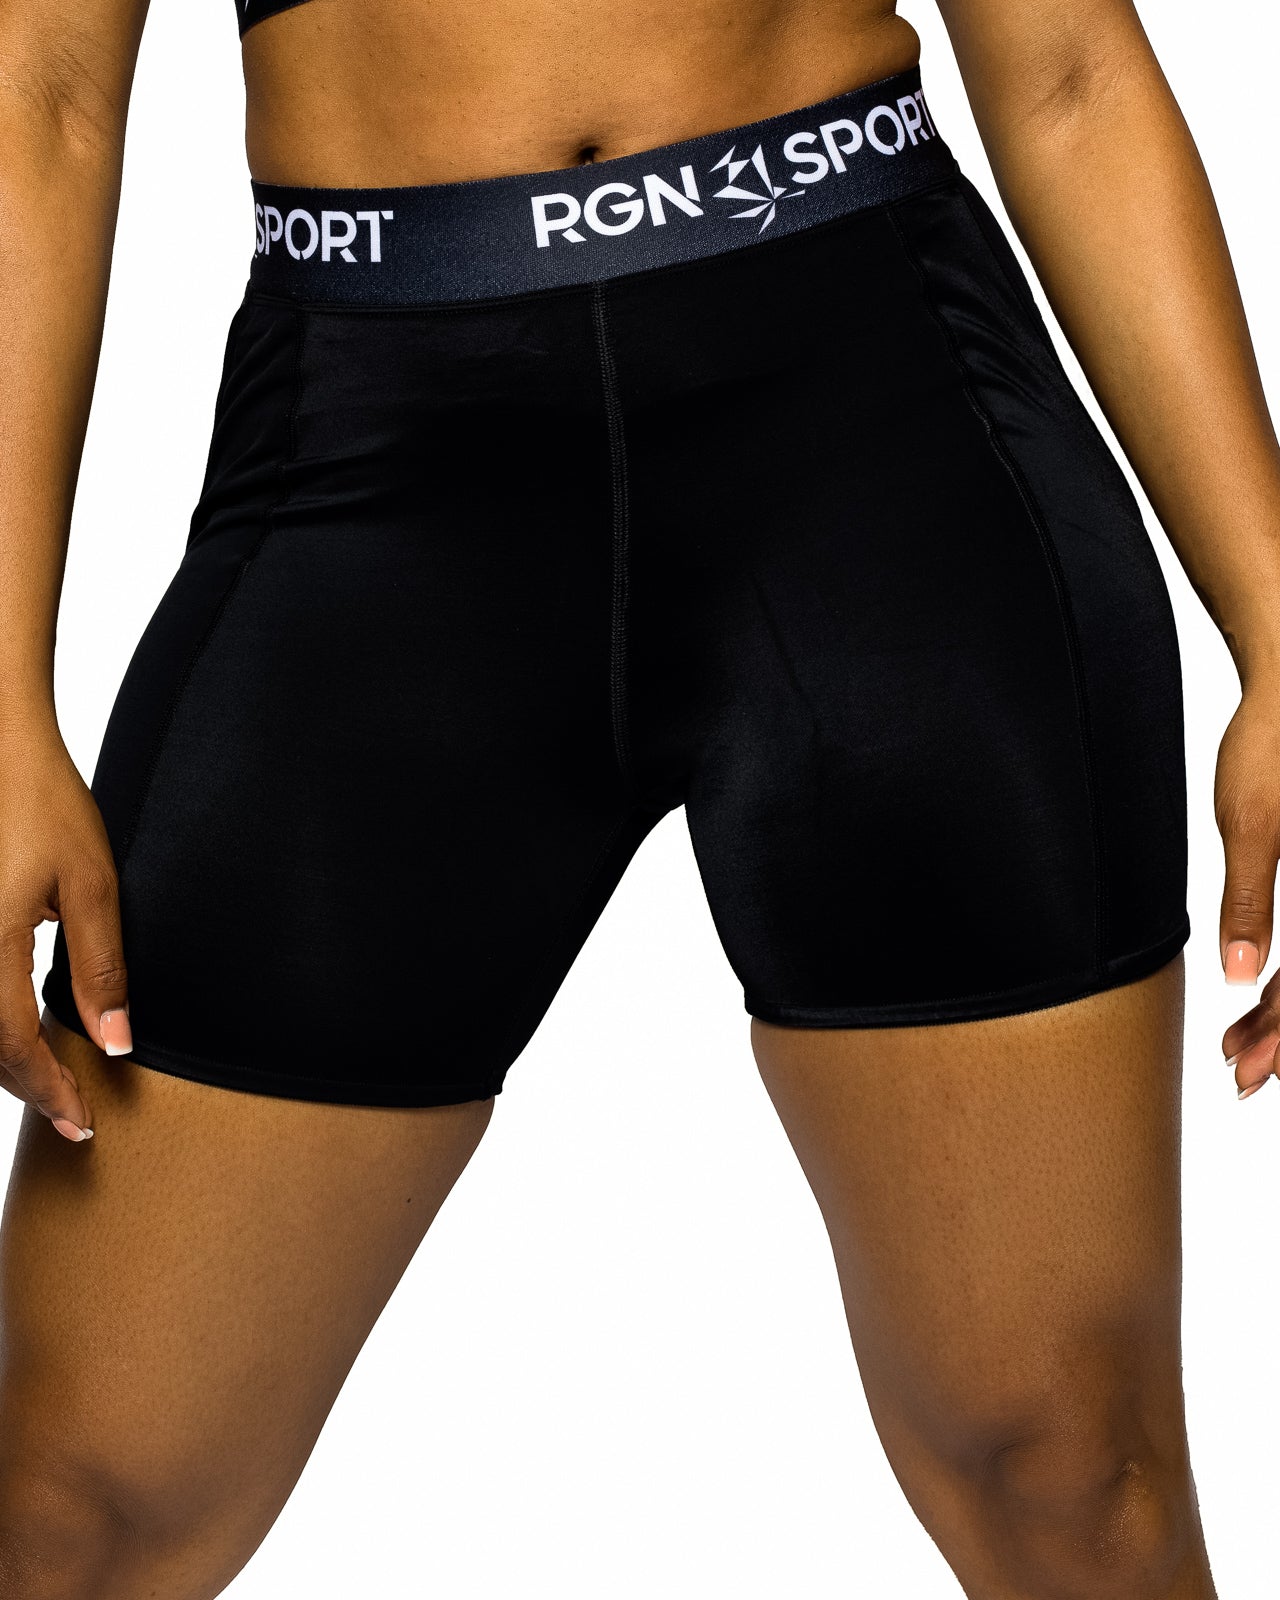 RGN Signature Black Shorts